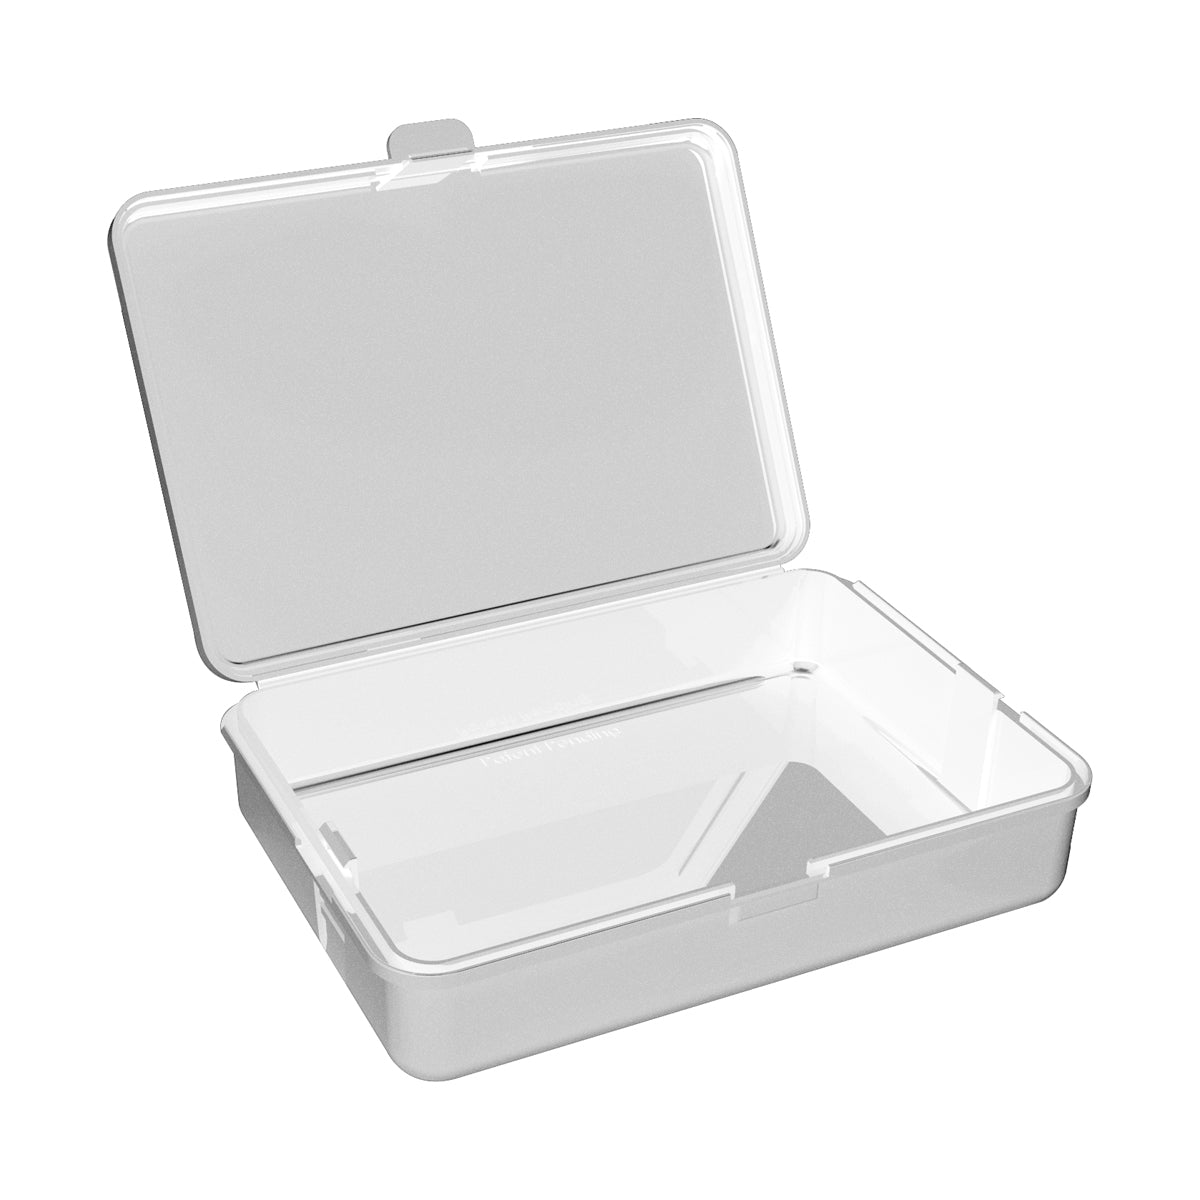 CRATIV Child Resistant | Snap Box Edible & Pre-Roll Joint Case - White Plastic - 312 Count  Biohazard Inc   